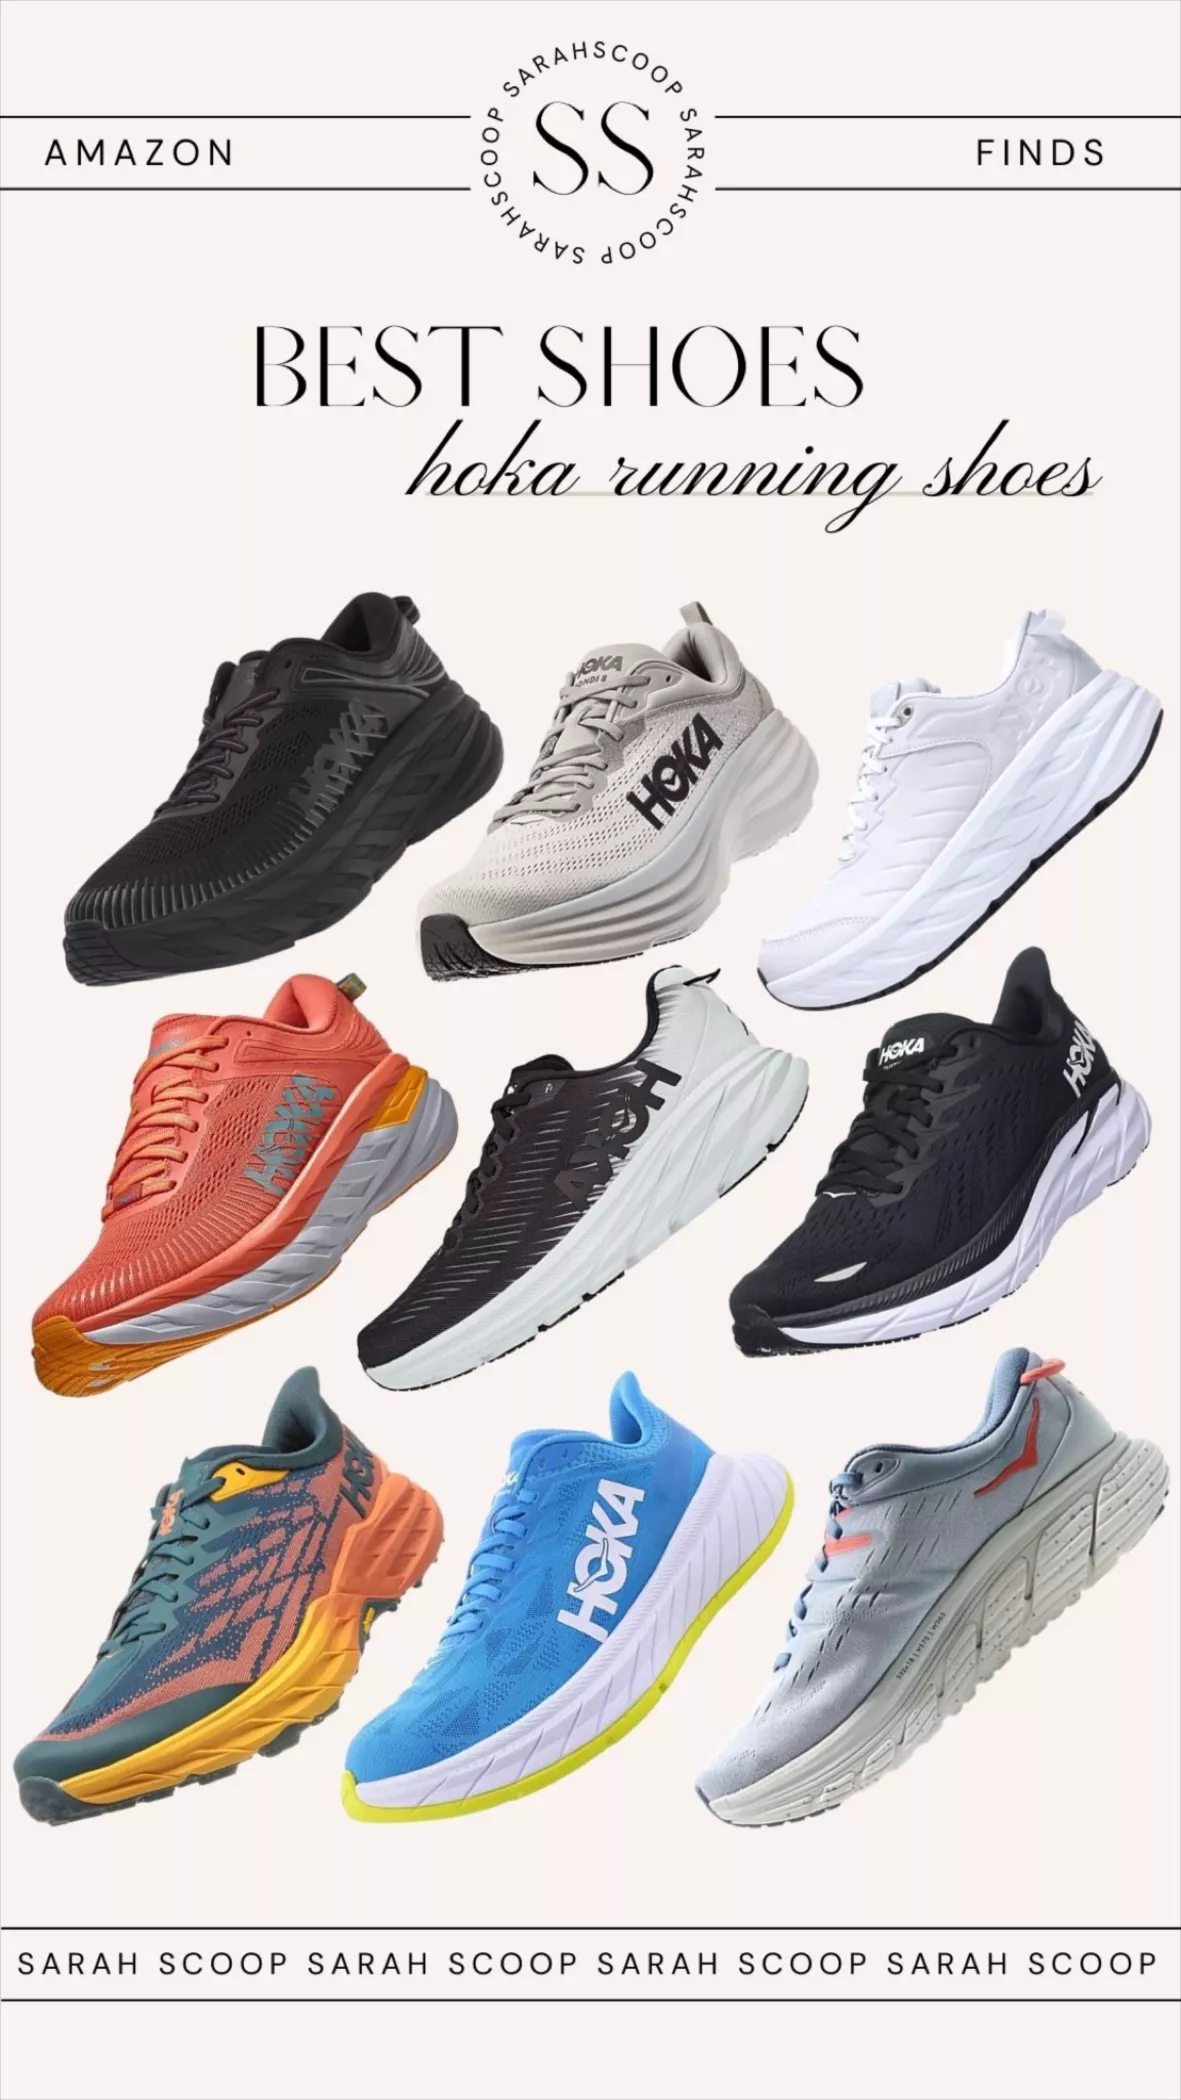 HOKA® Running Shoes for Men and Women